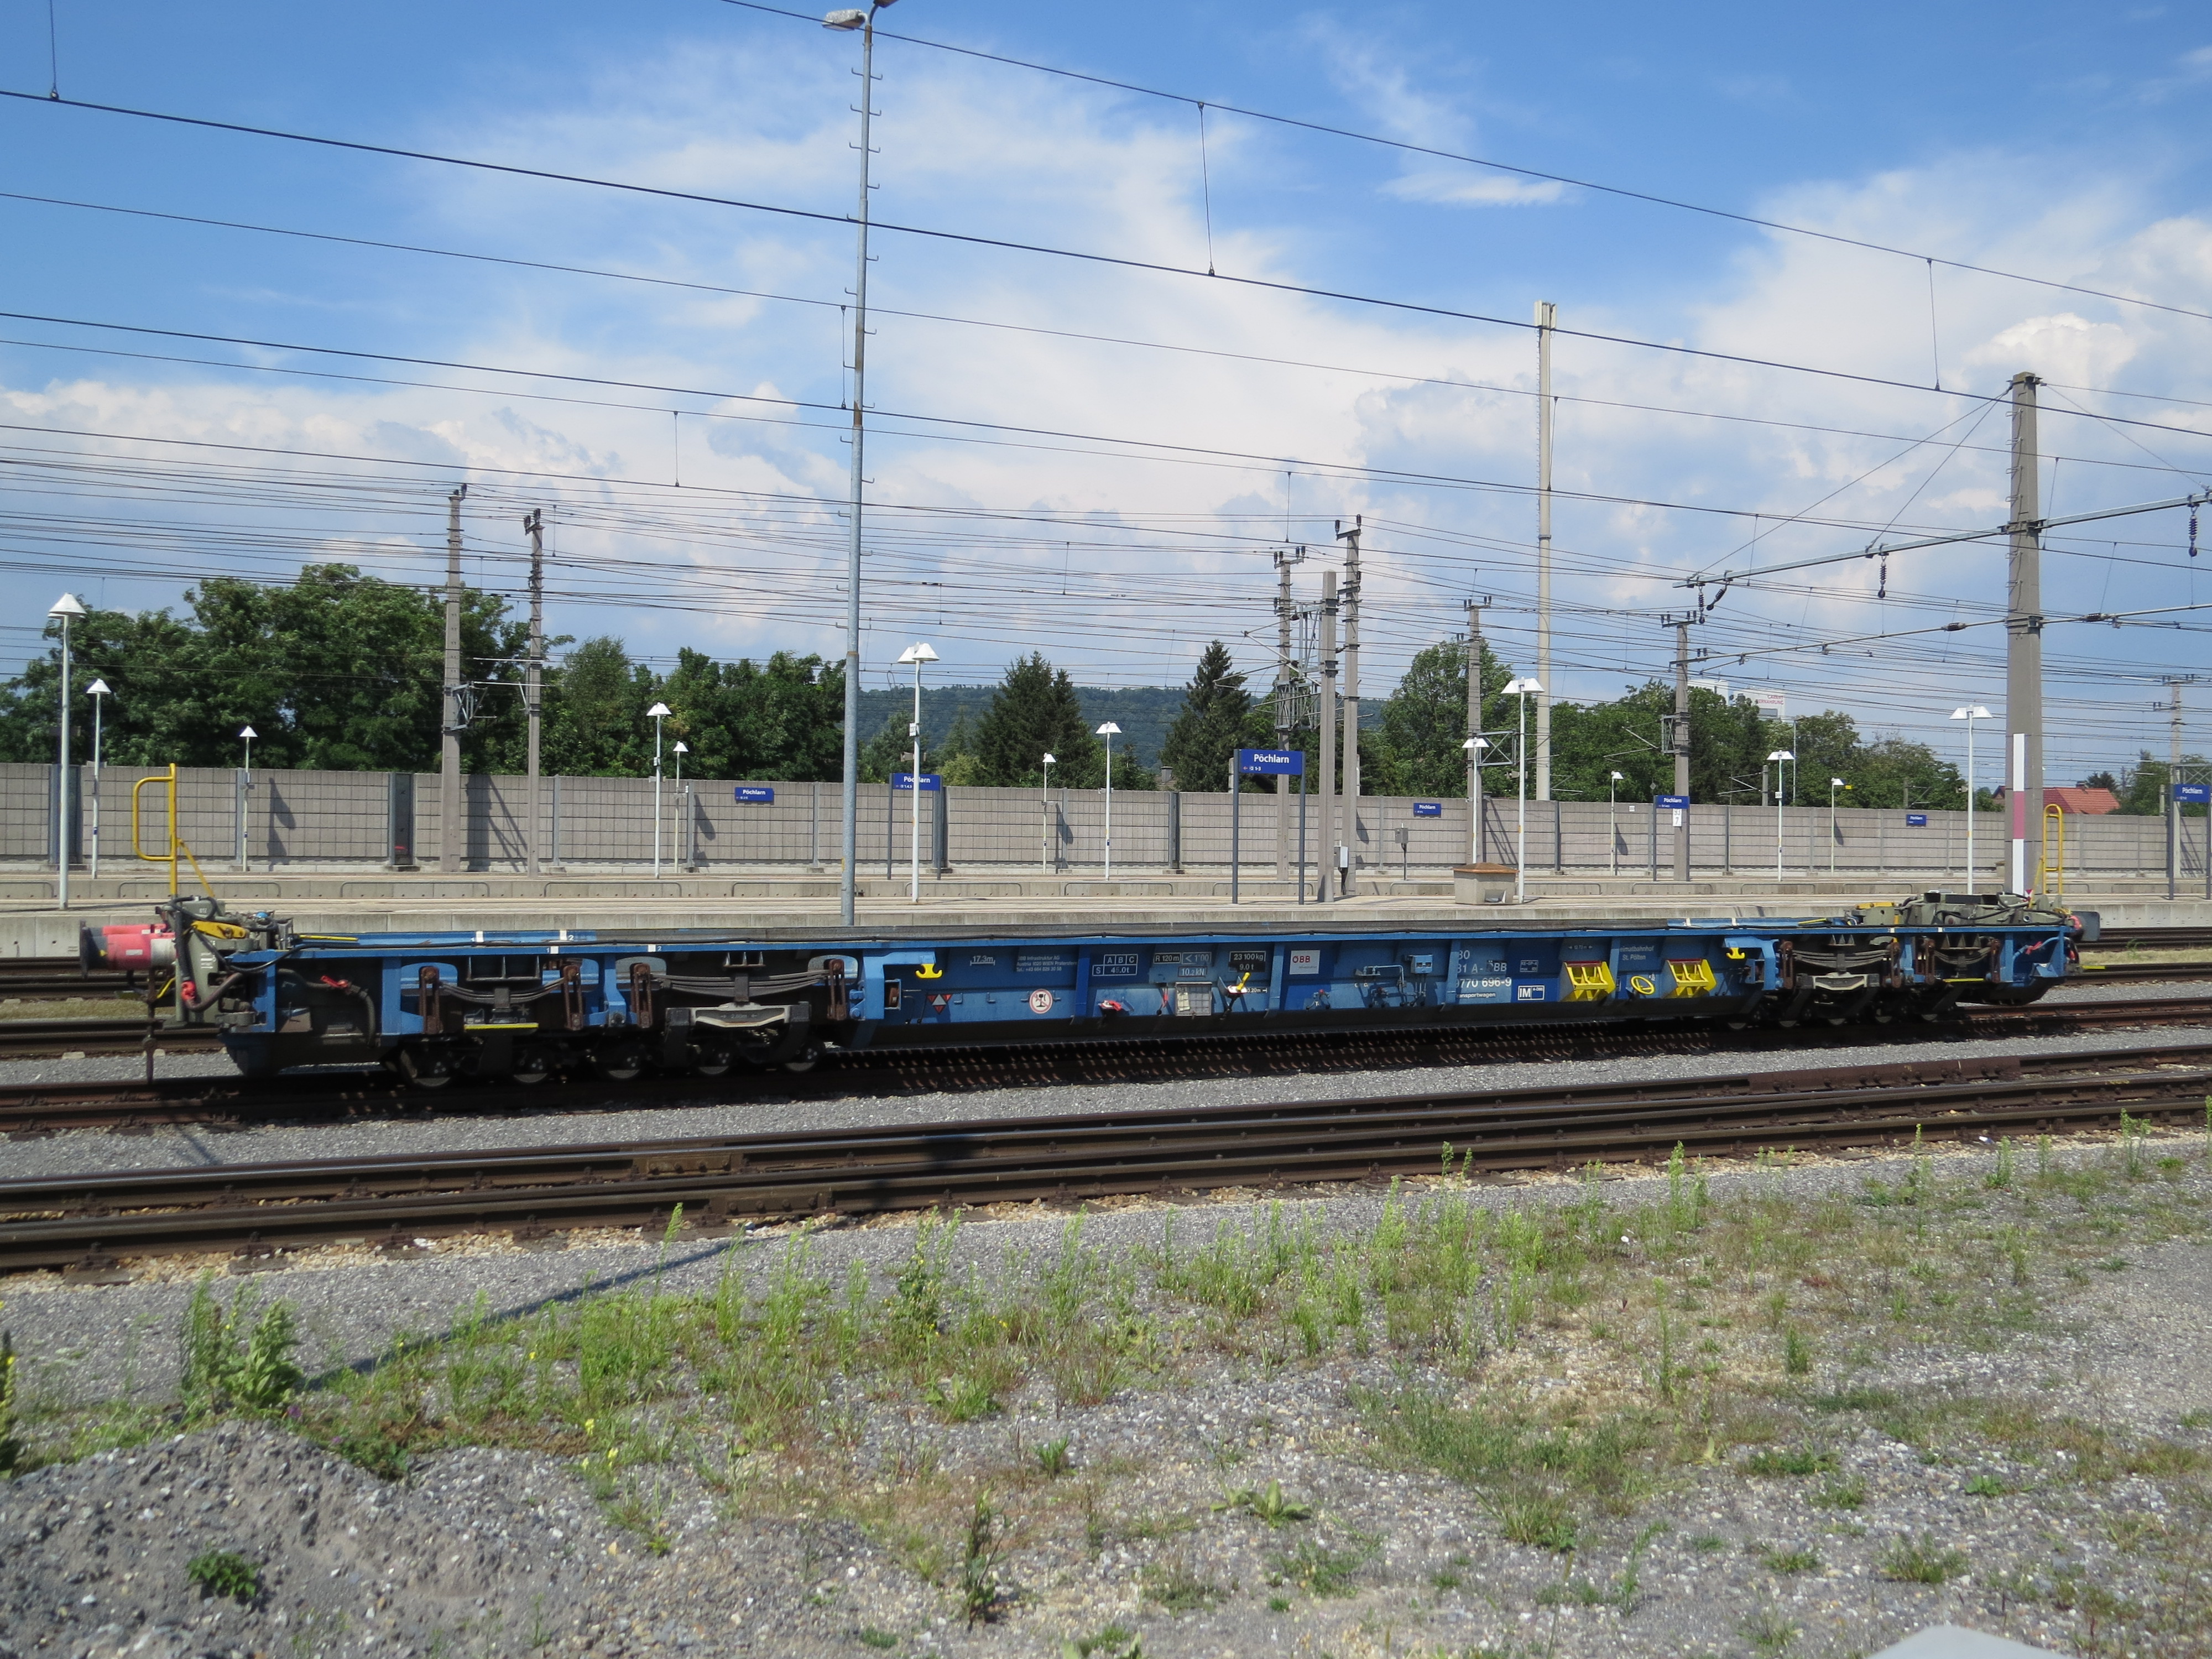 2018-07-17 (400) 80 81 9770 696-9 at Bahnhof Pöchlarn